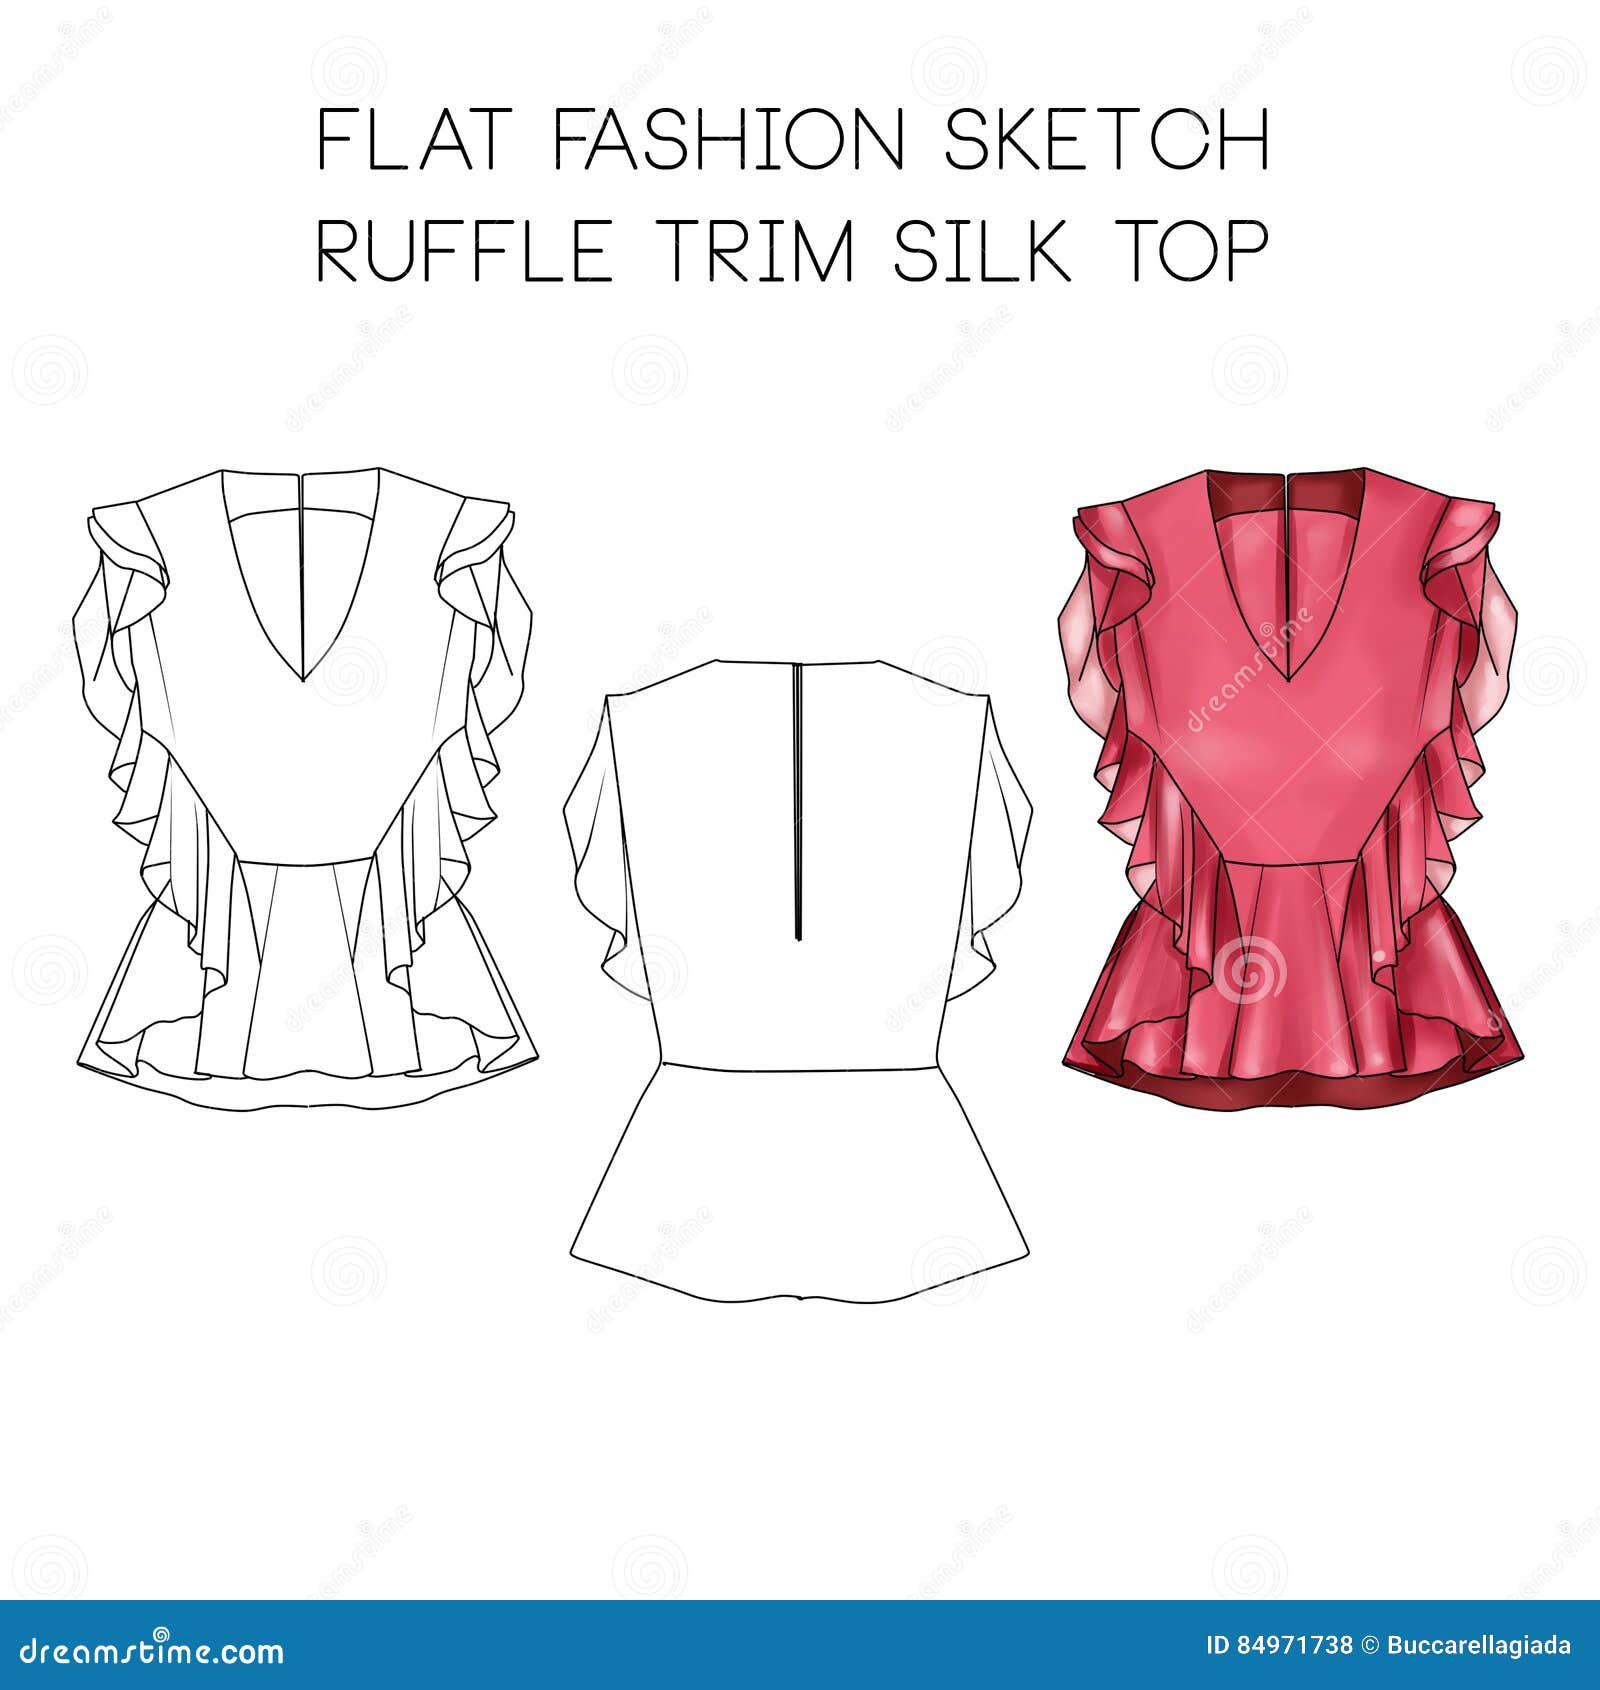 Blouse Designfashion Flat Sketch Apparel Templateruffle Stock Vector  Royalty Free 1692754762  Shutterstock